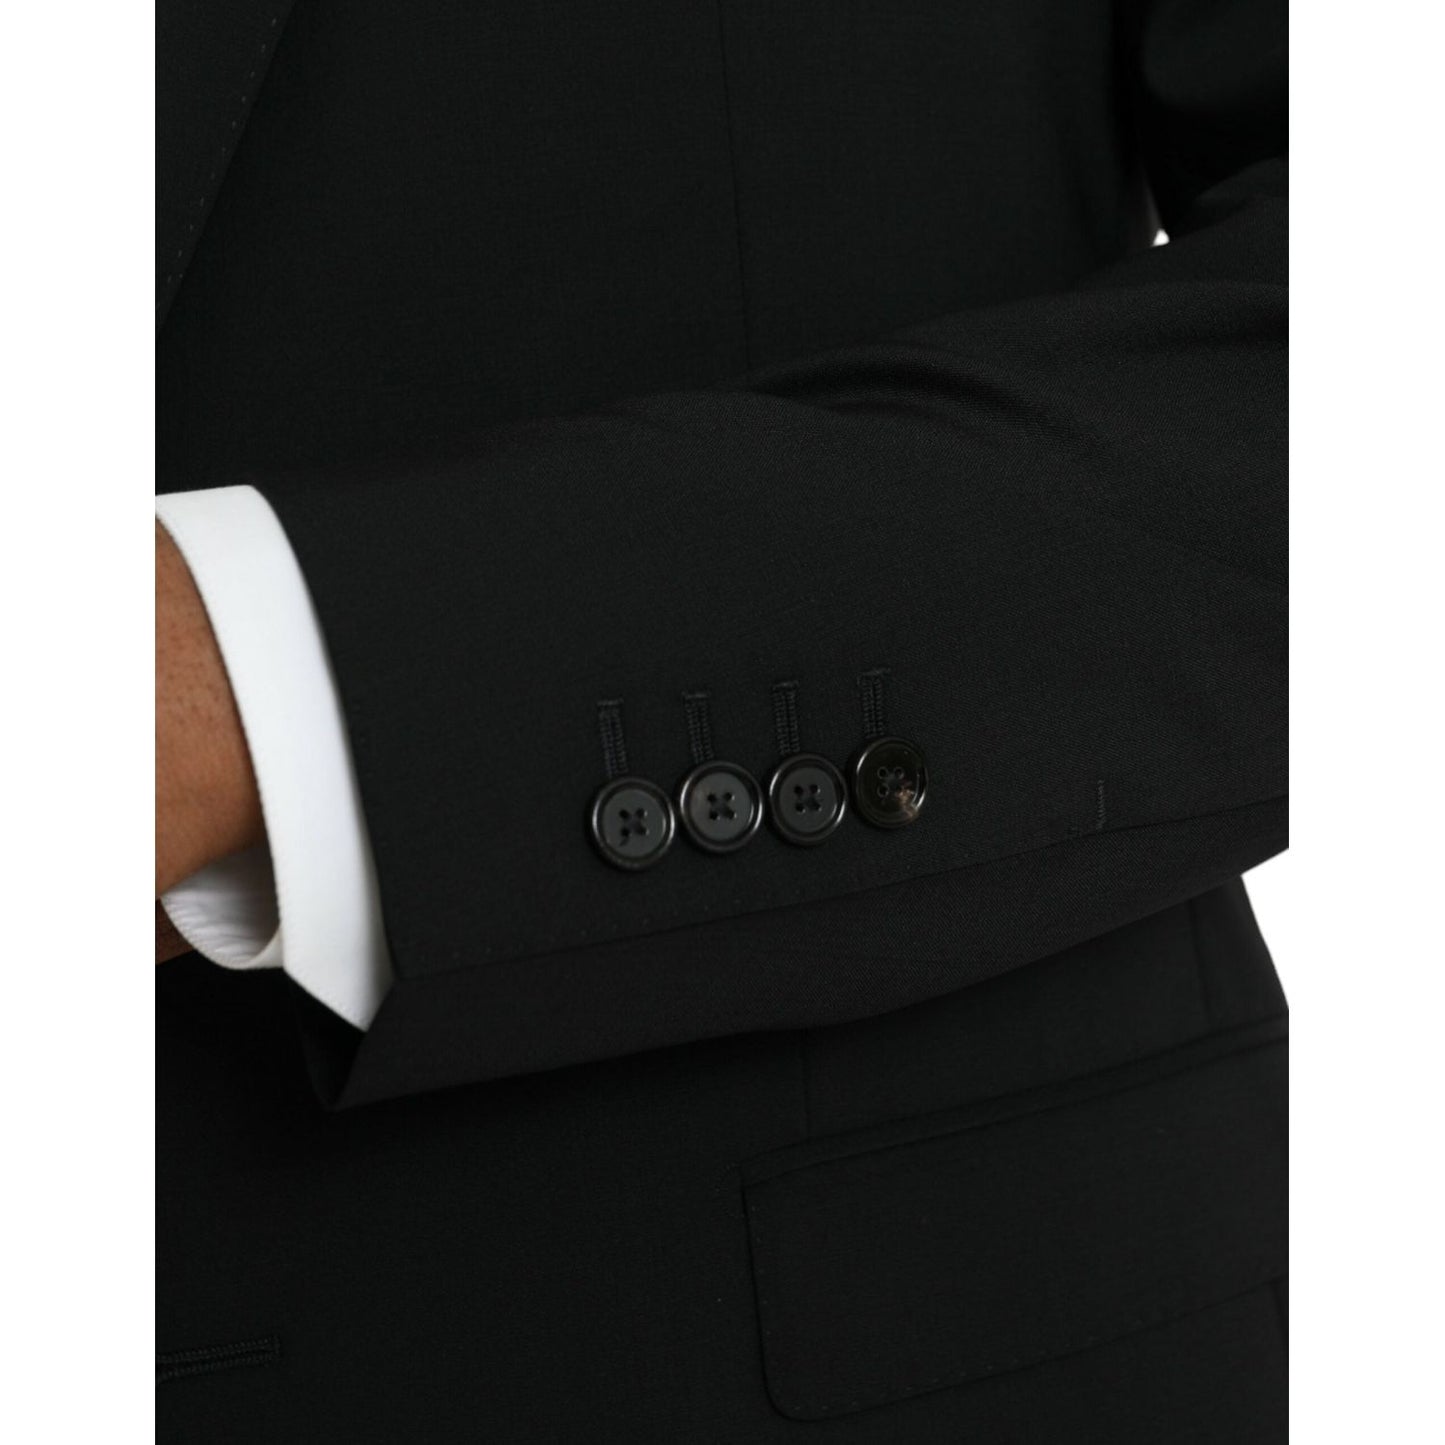 Dolce & Gabbana Black Wool MARTINI Formal 2 Piece Suit black-wool-martini-formal-2-piece-suit